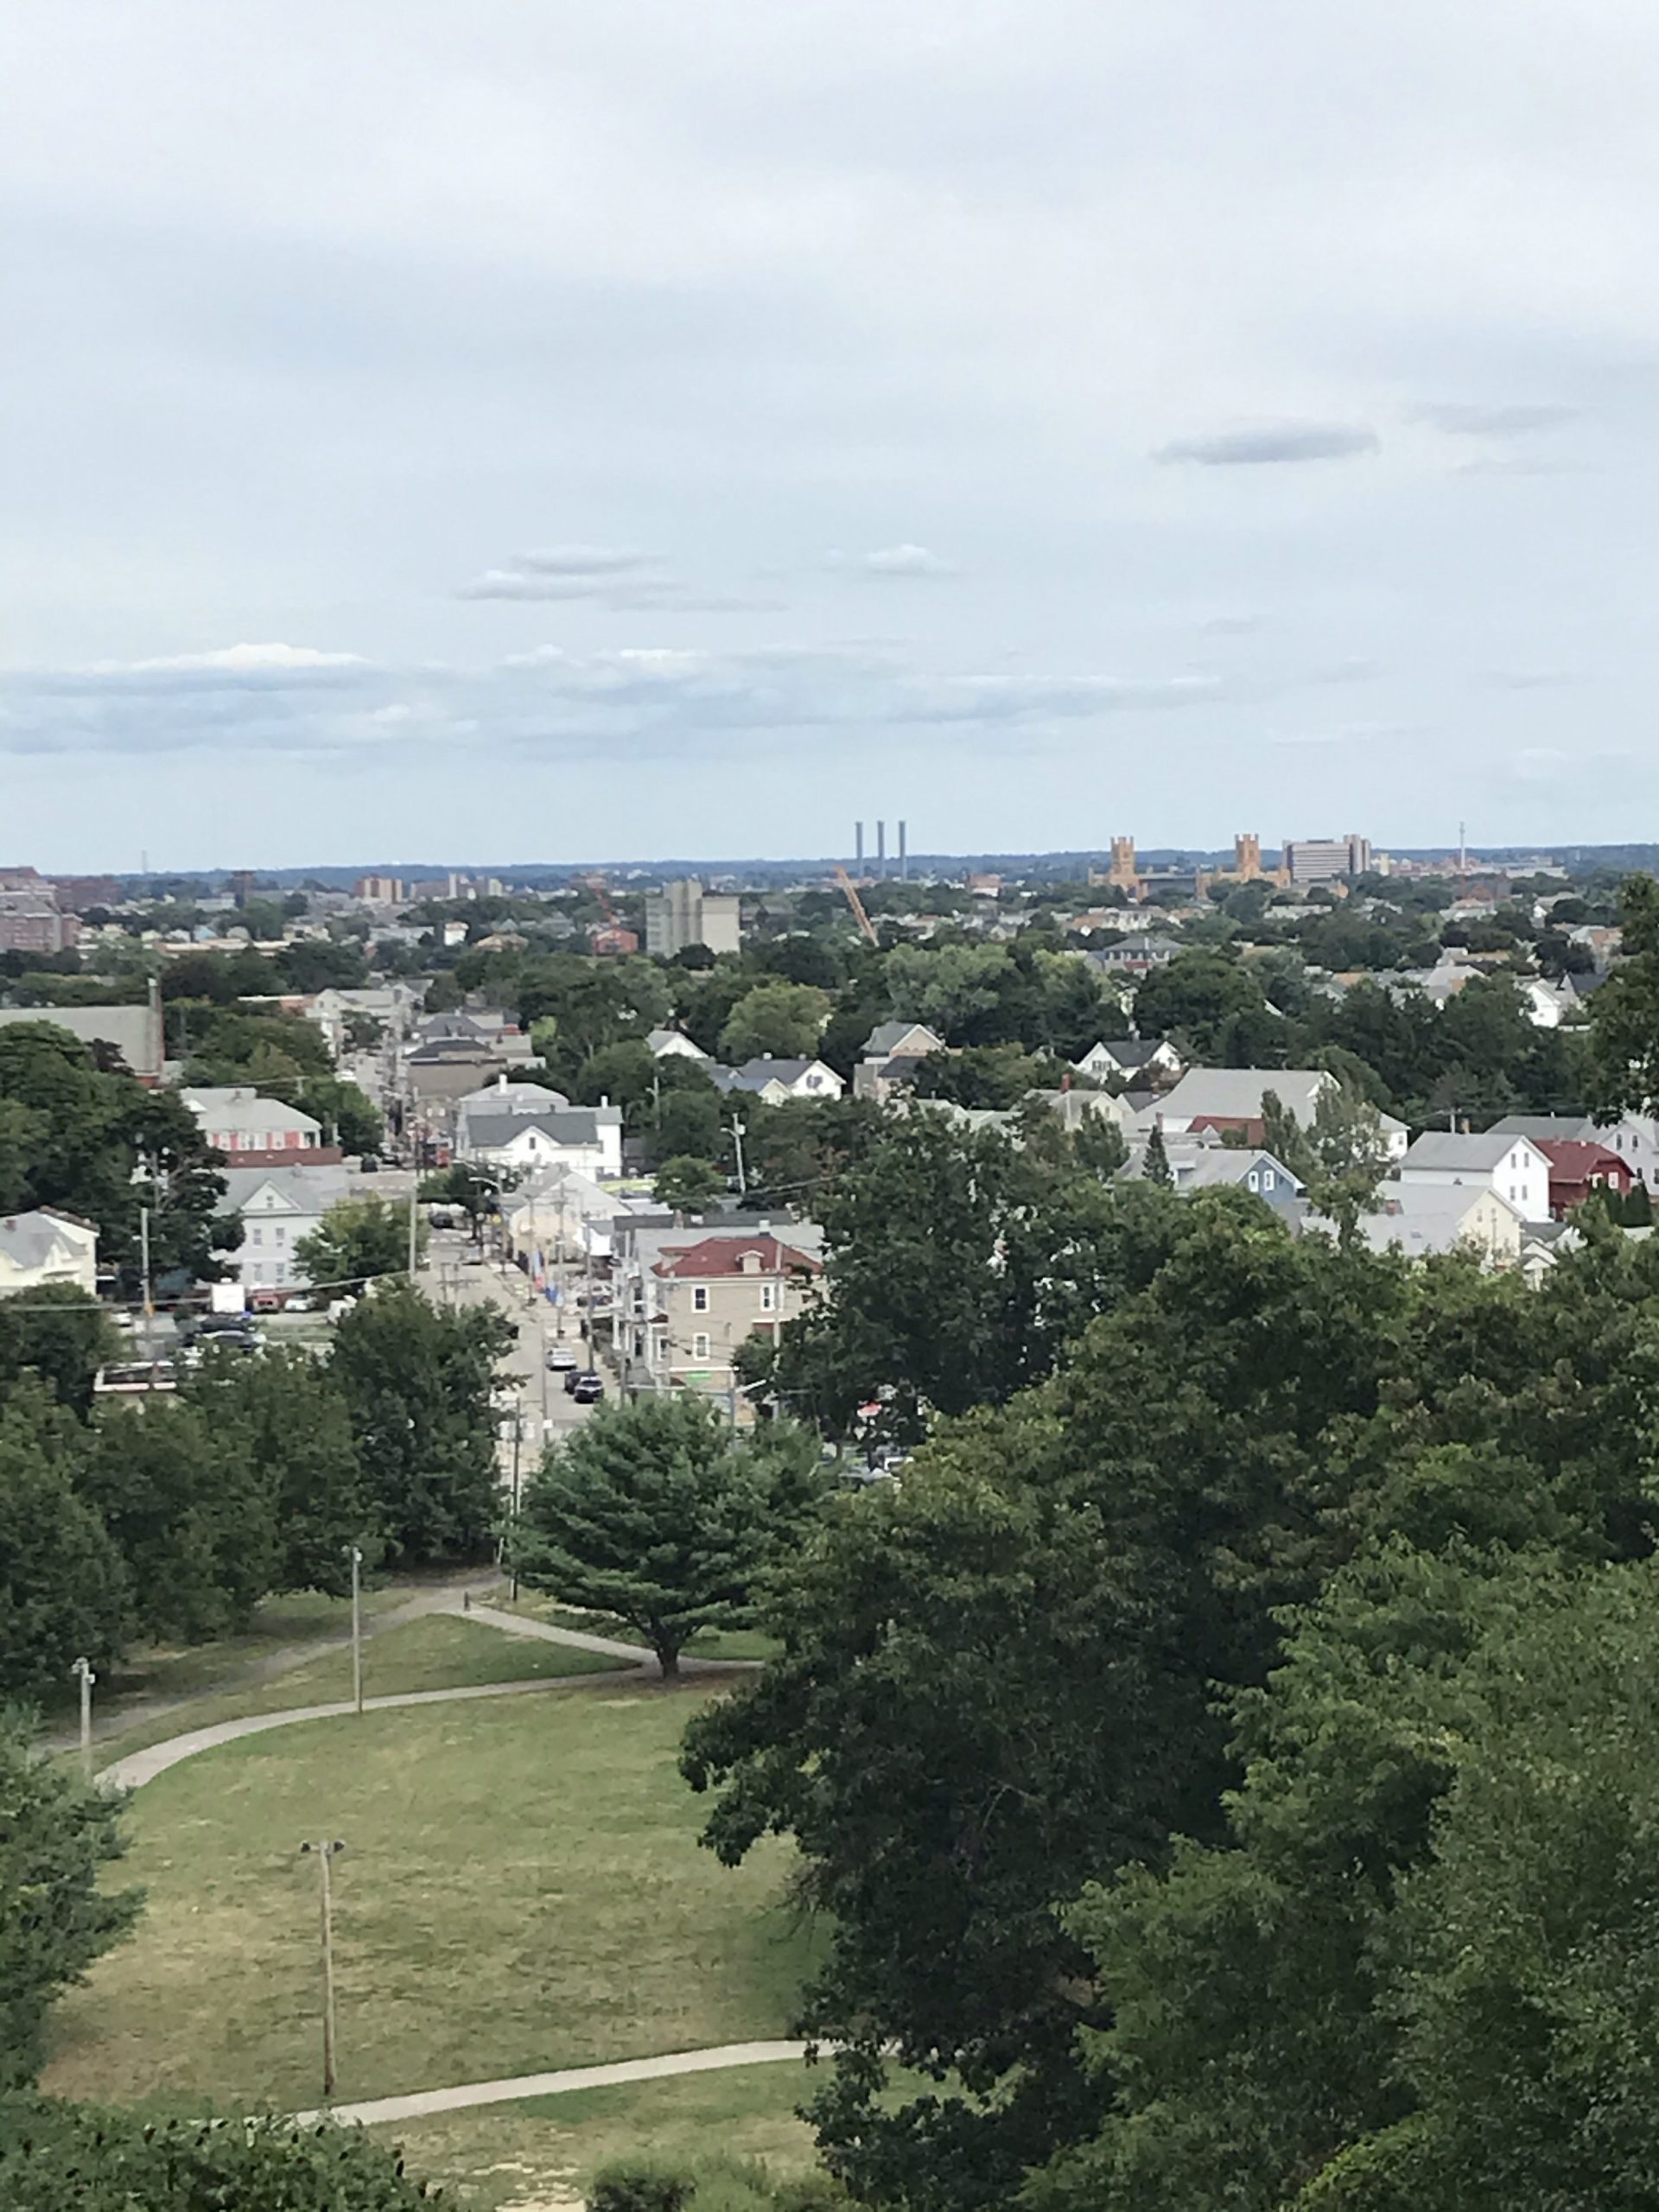 Neutaconkanut Hill Park with kids in Providence Rhode Island